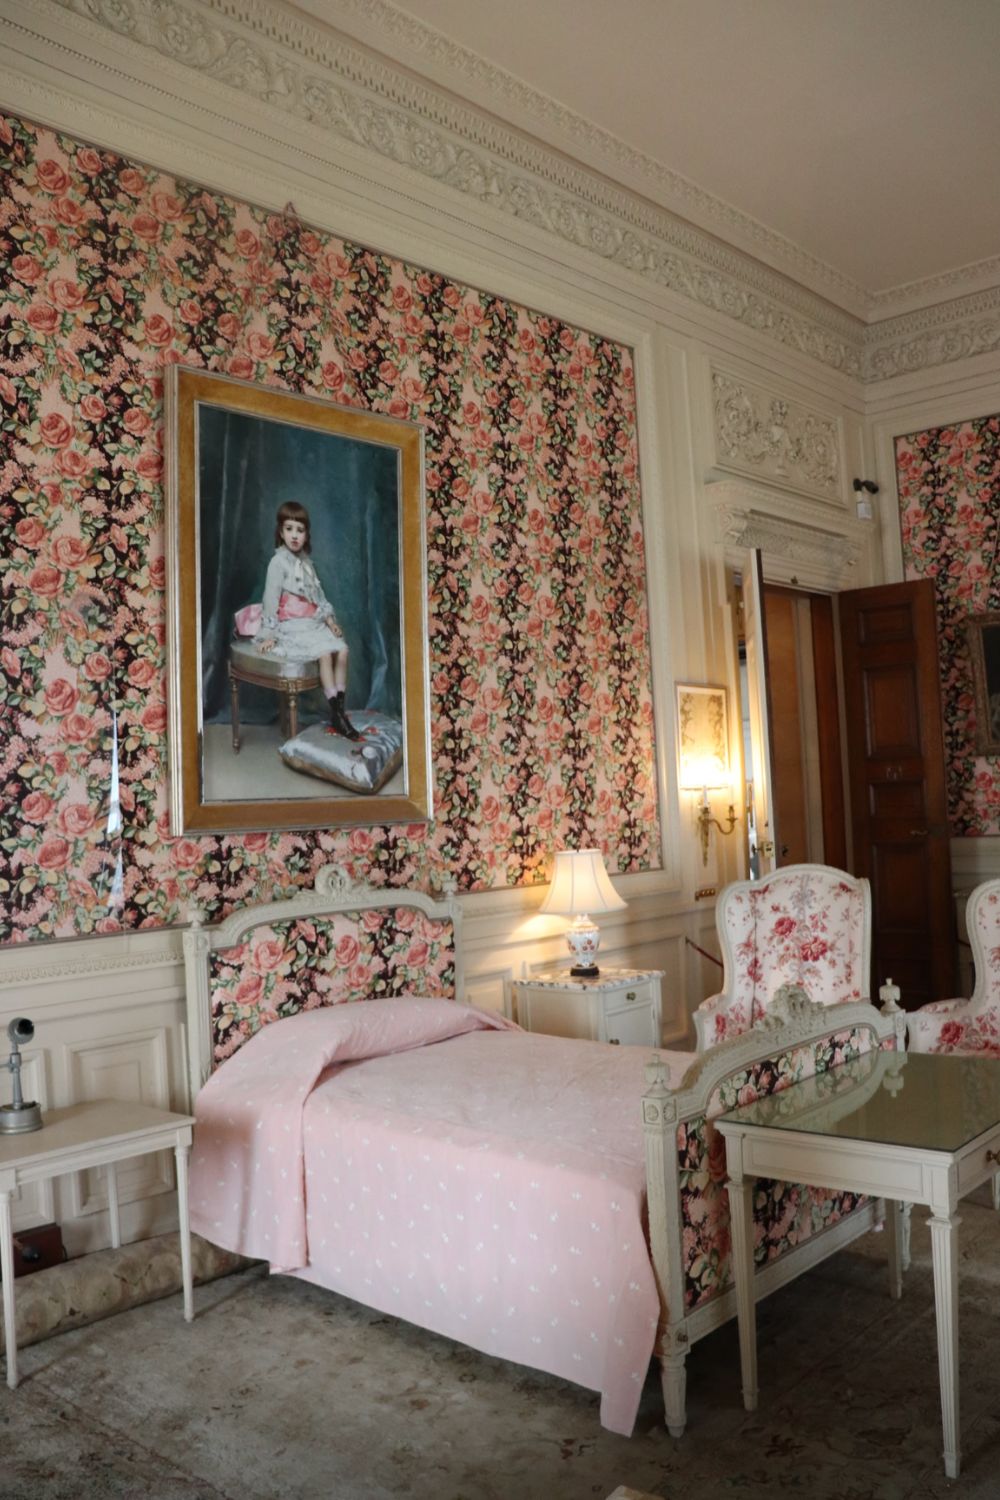 Opulent bedroom of The Breakers Gilded Age mansion in Newport, Rhode Island